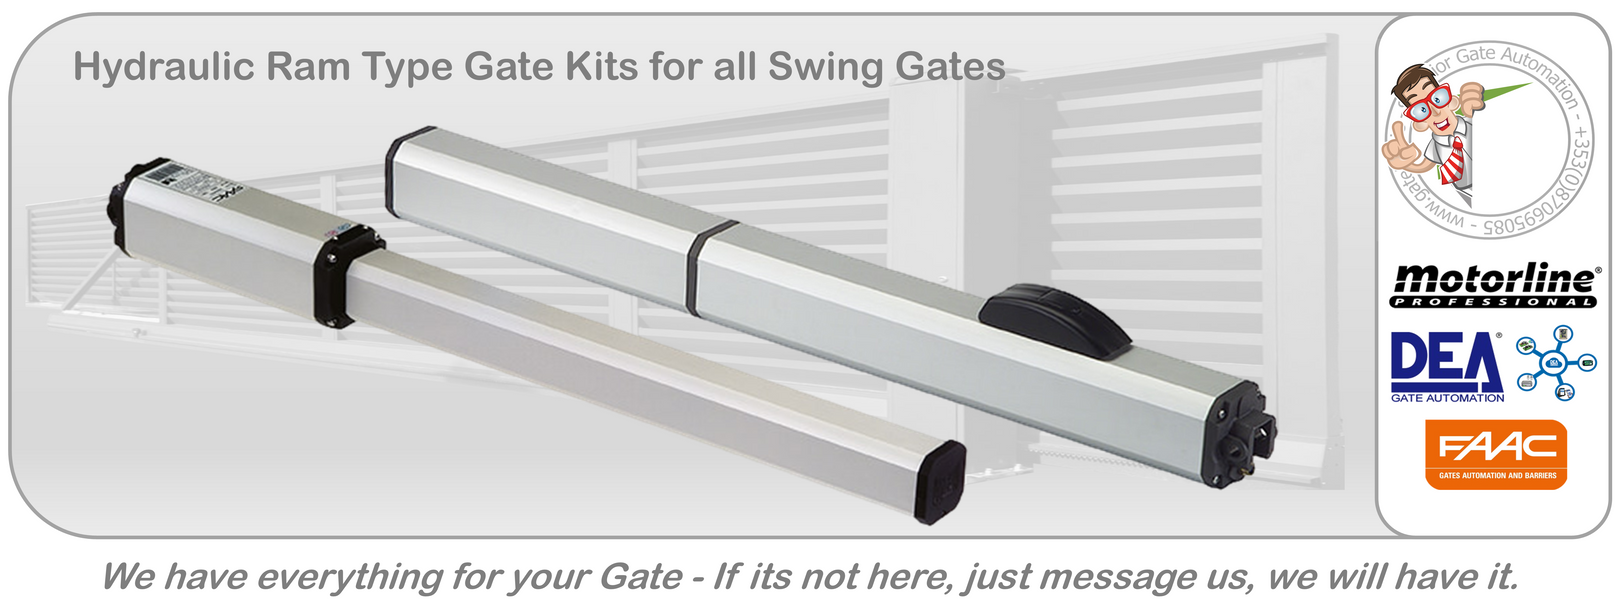 Hydraulic Ram Gate Kits